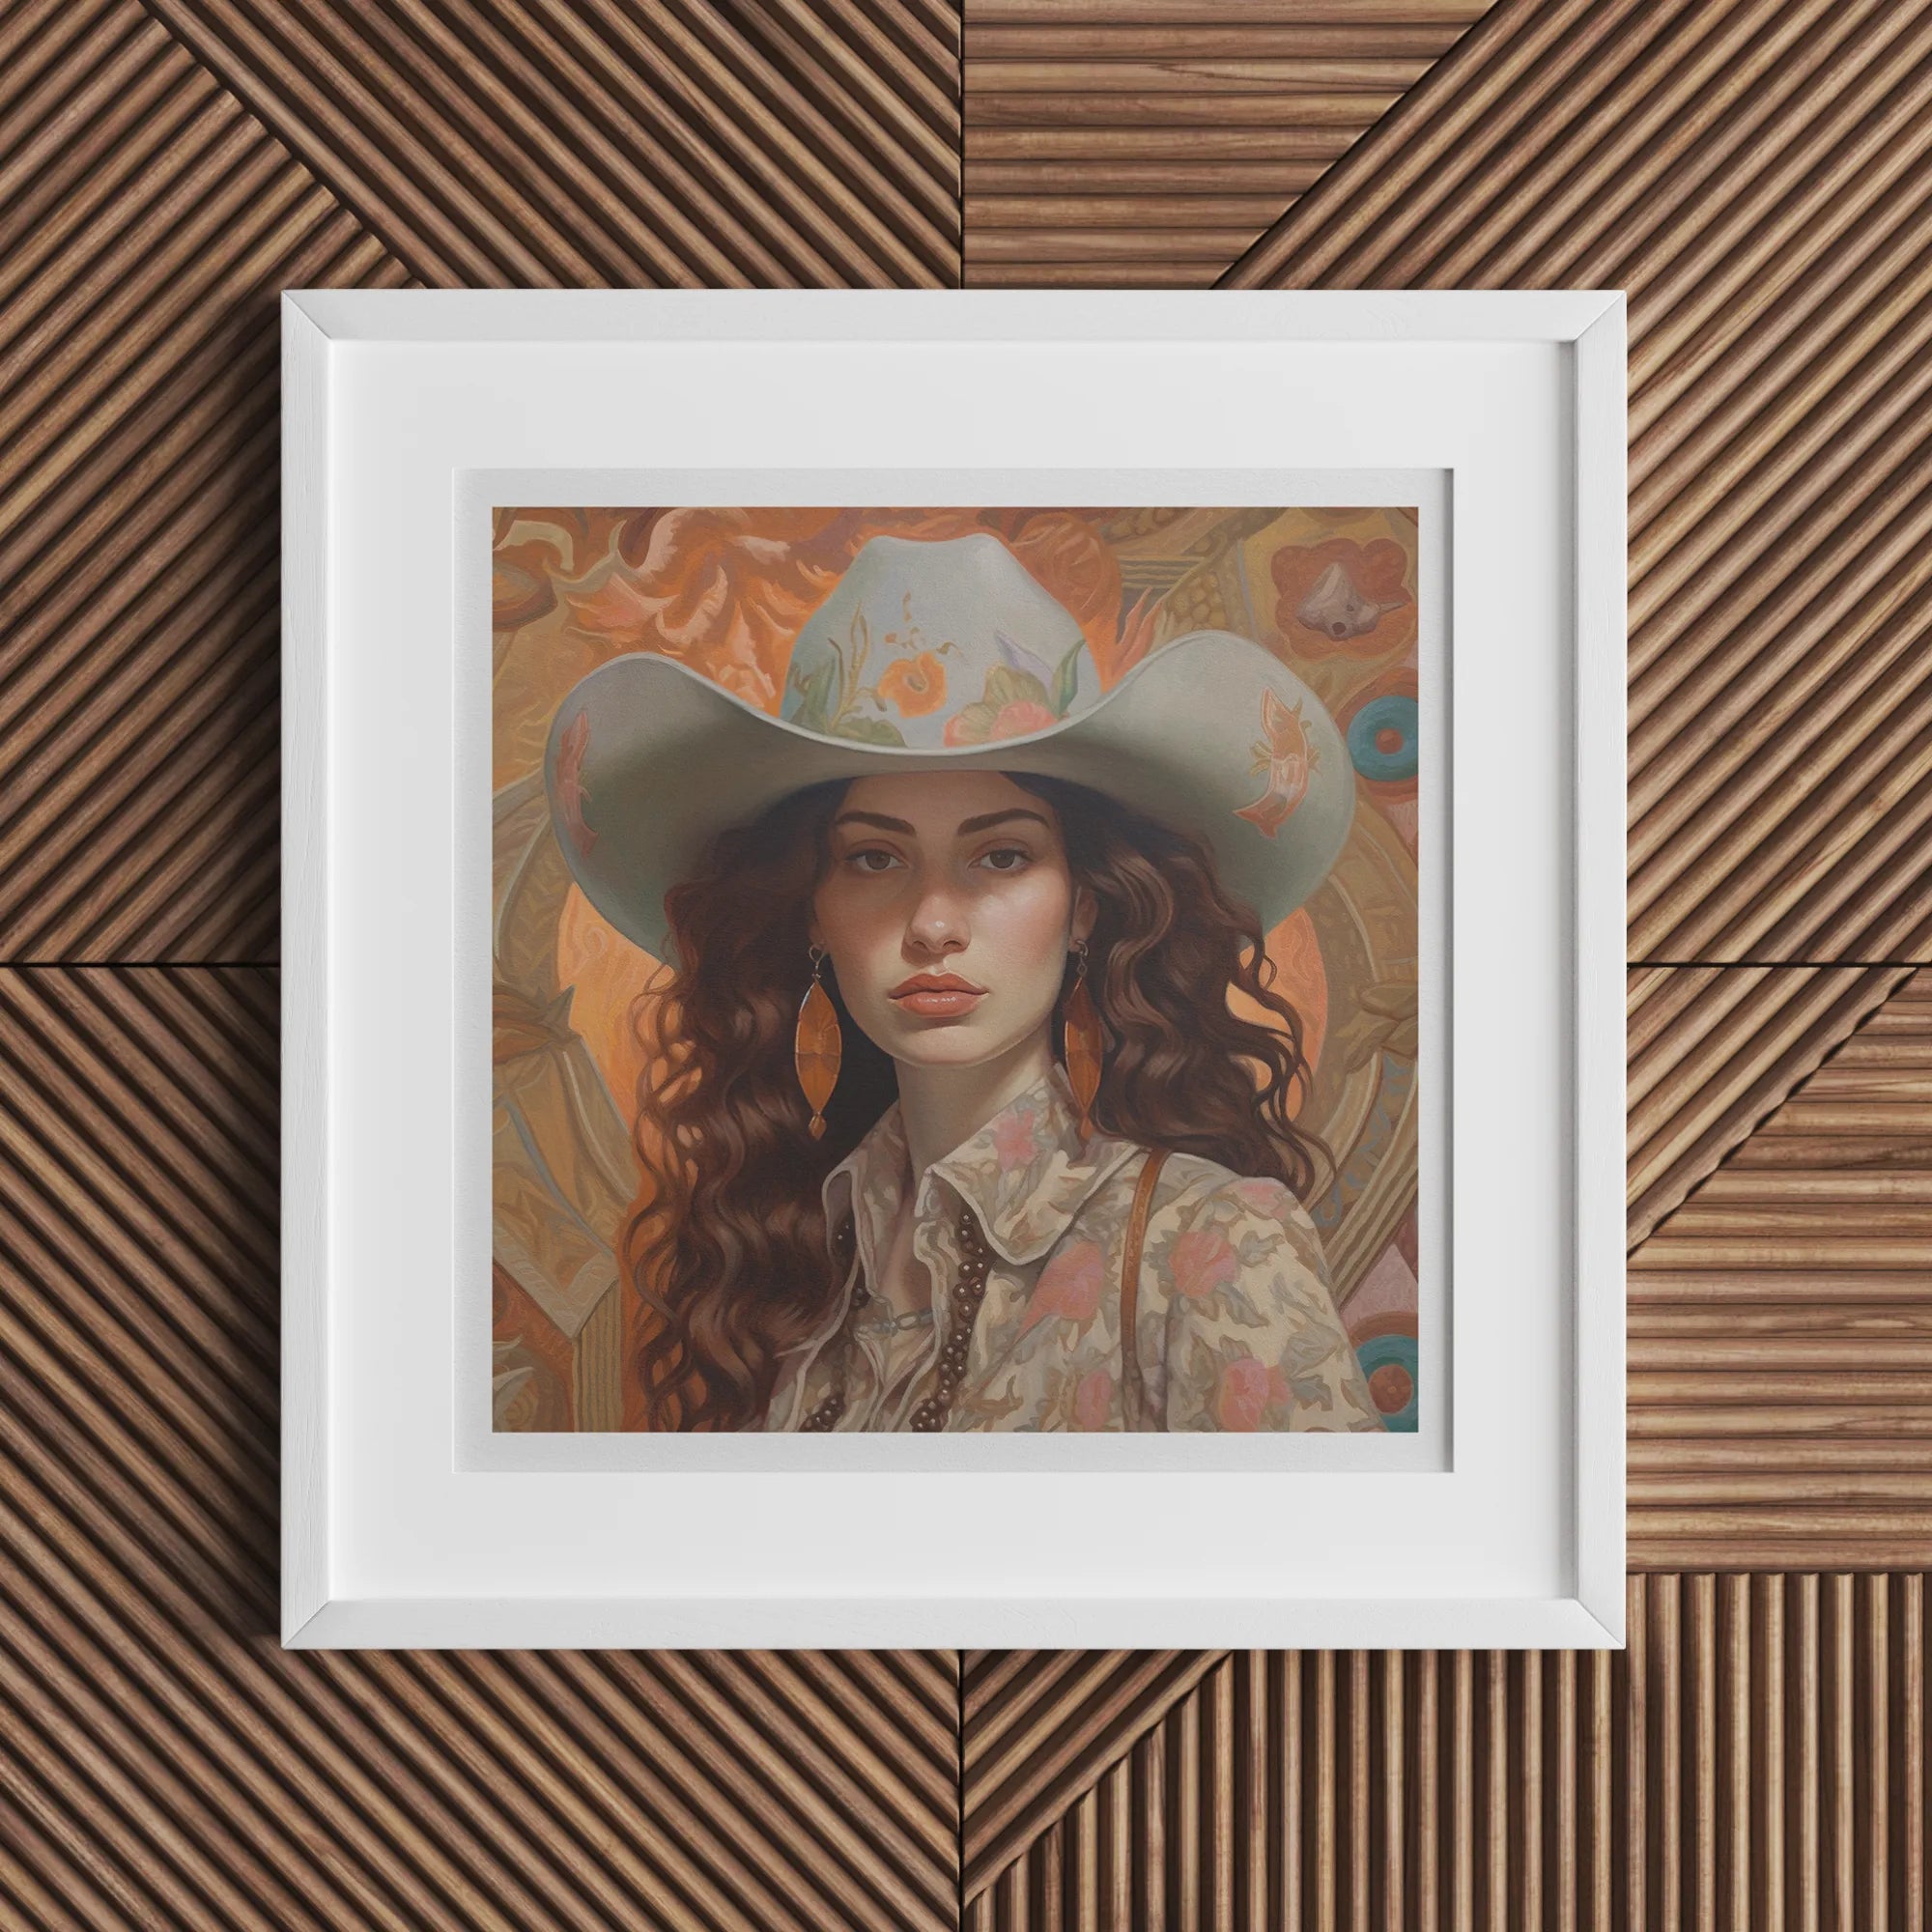 Nina - Lesbian Cowgirl Art Print - Wlw Jewish Sapphic Femme - 16’x16’ - Posters Prints & Visual Artwork - Aesthetic Art